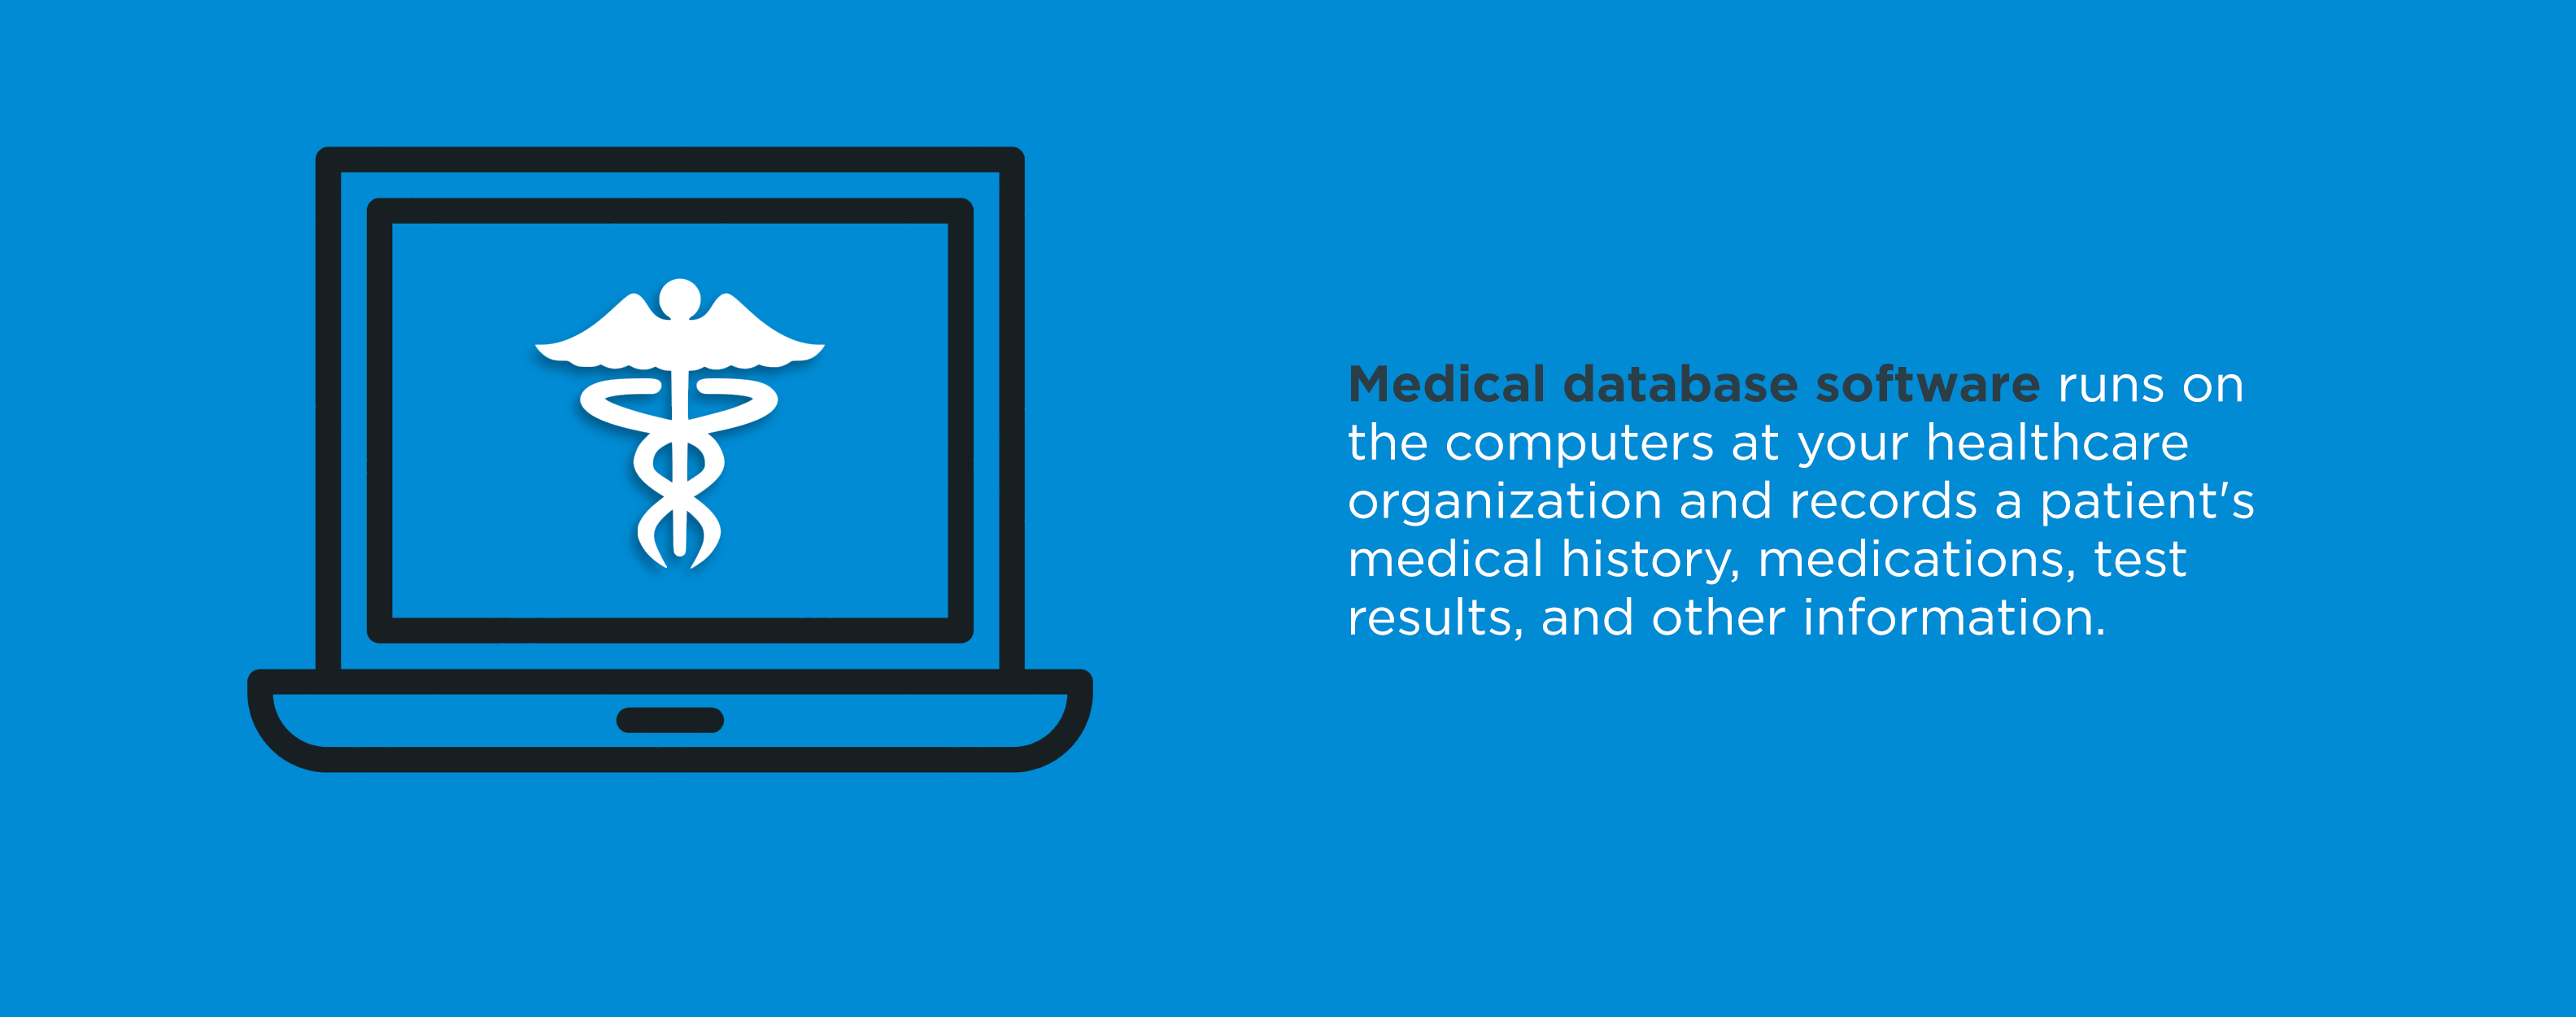 medical-database-software-runs